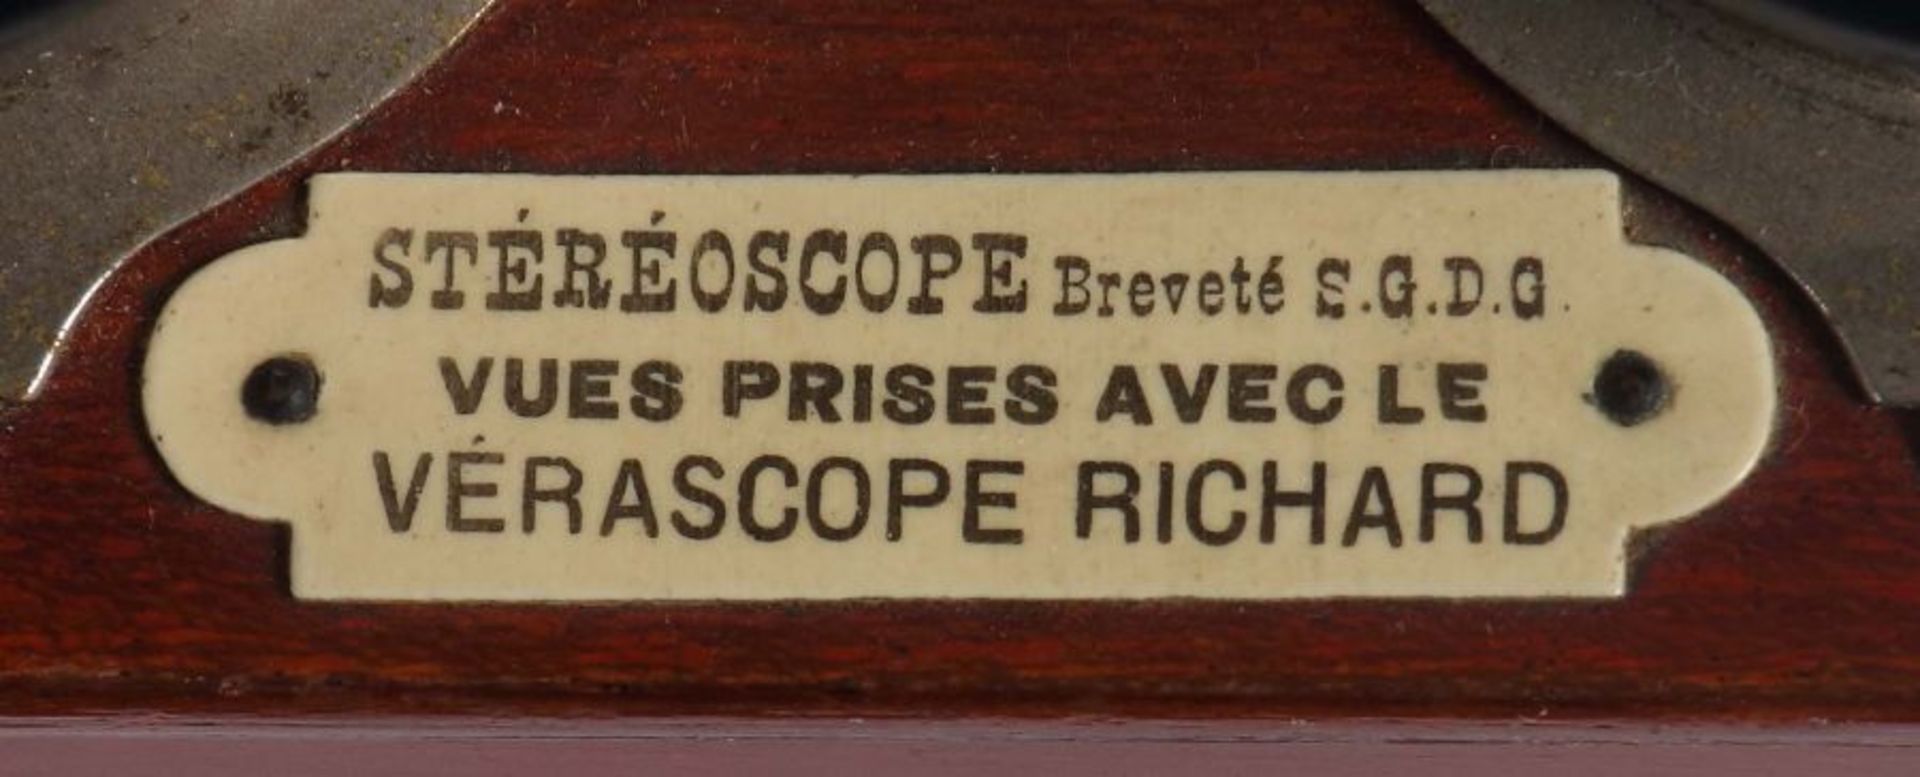 3 Hand-Stereobetrachter2x Jules Richard "Stéréoscope" & Leroy "Stéréocycle", Paris, um 1910/15, - Bild 2 aus 2